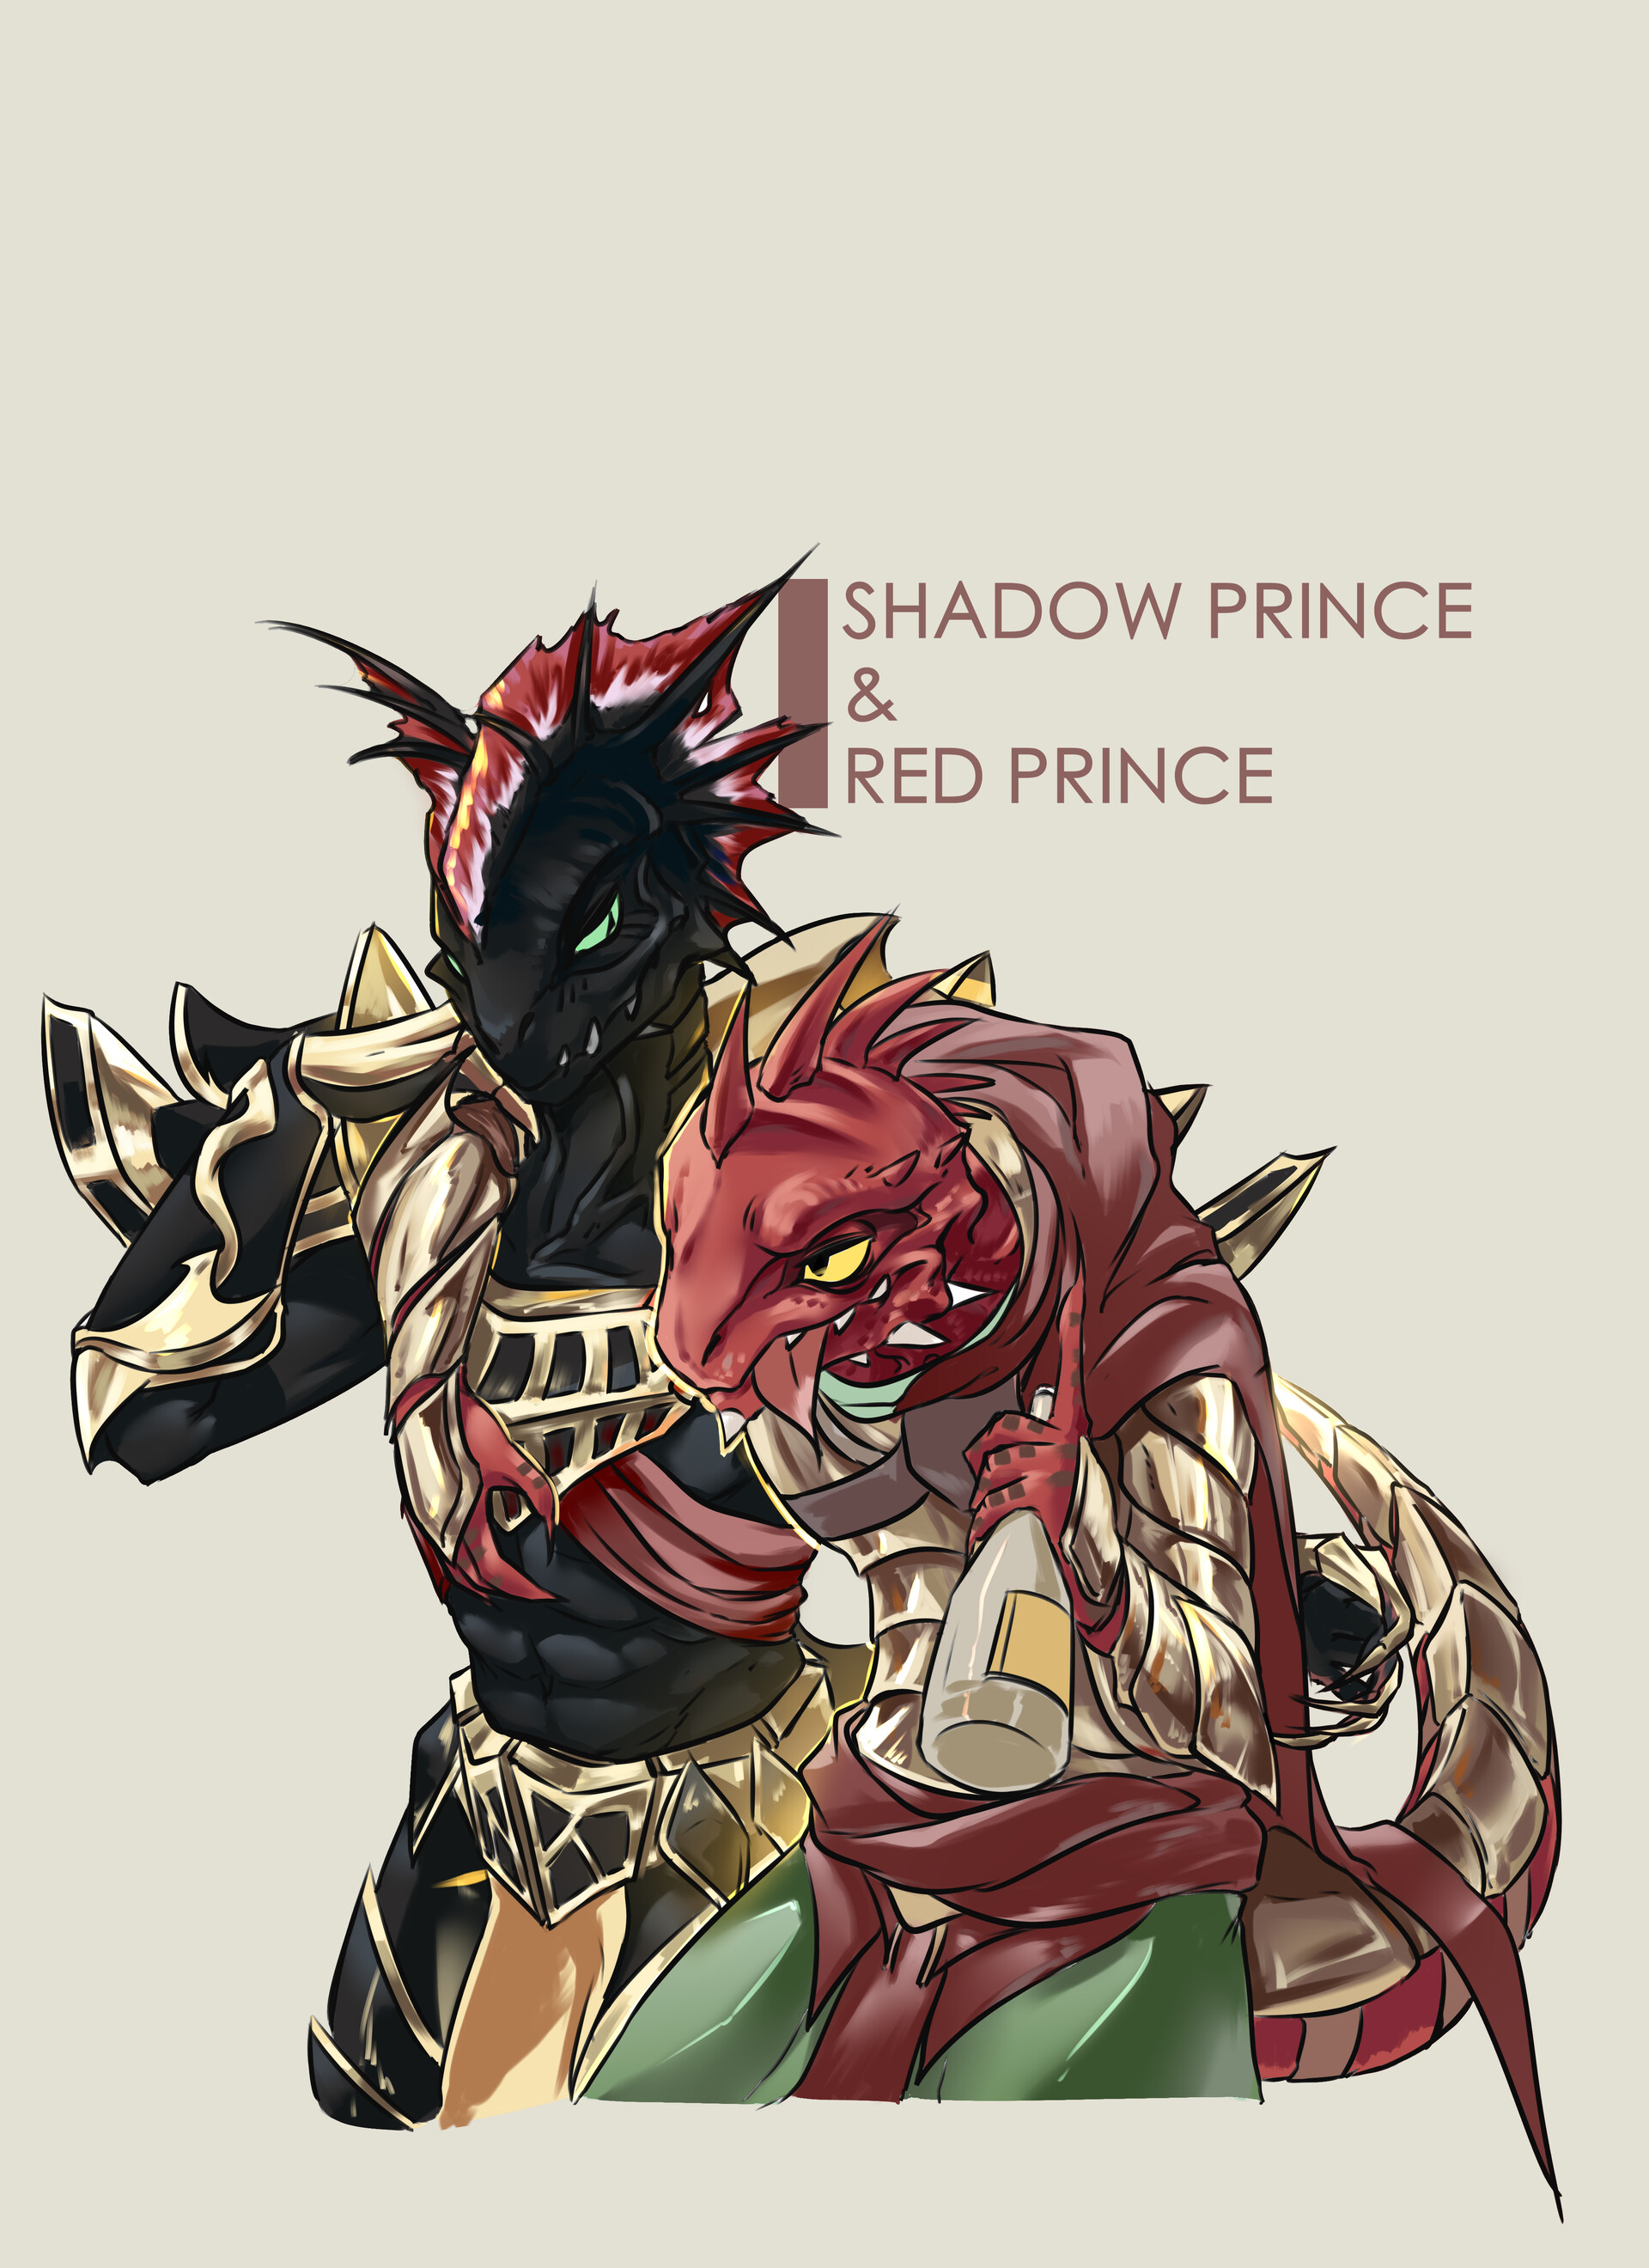 ArtStation - divinity original sin 2 ： red prince shadow prince